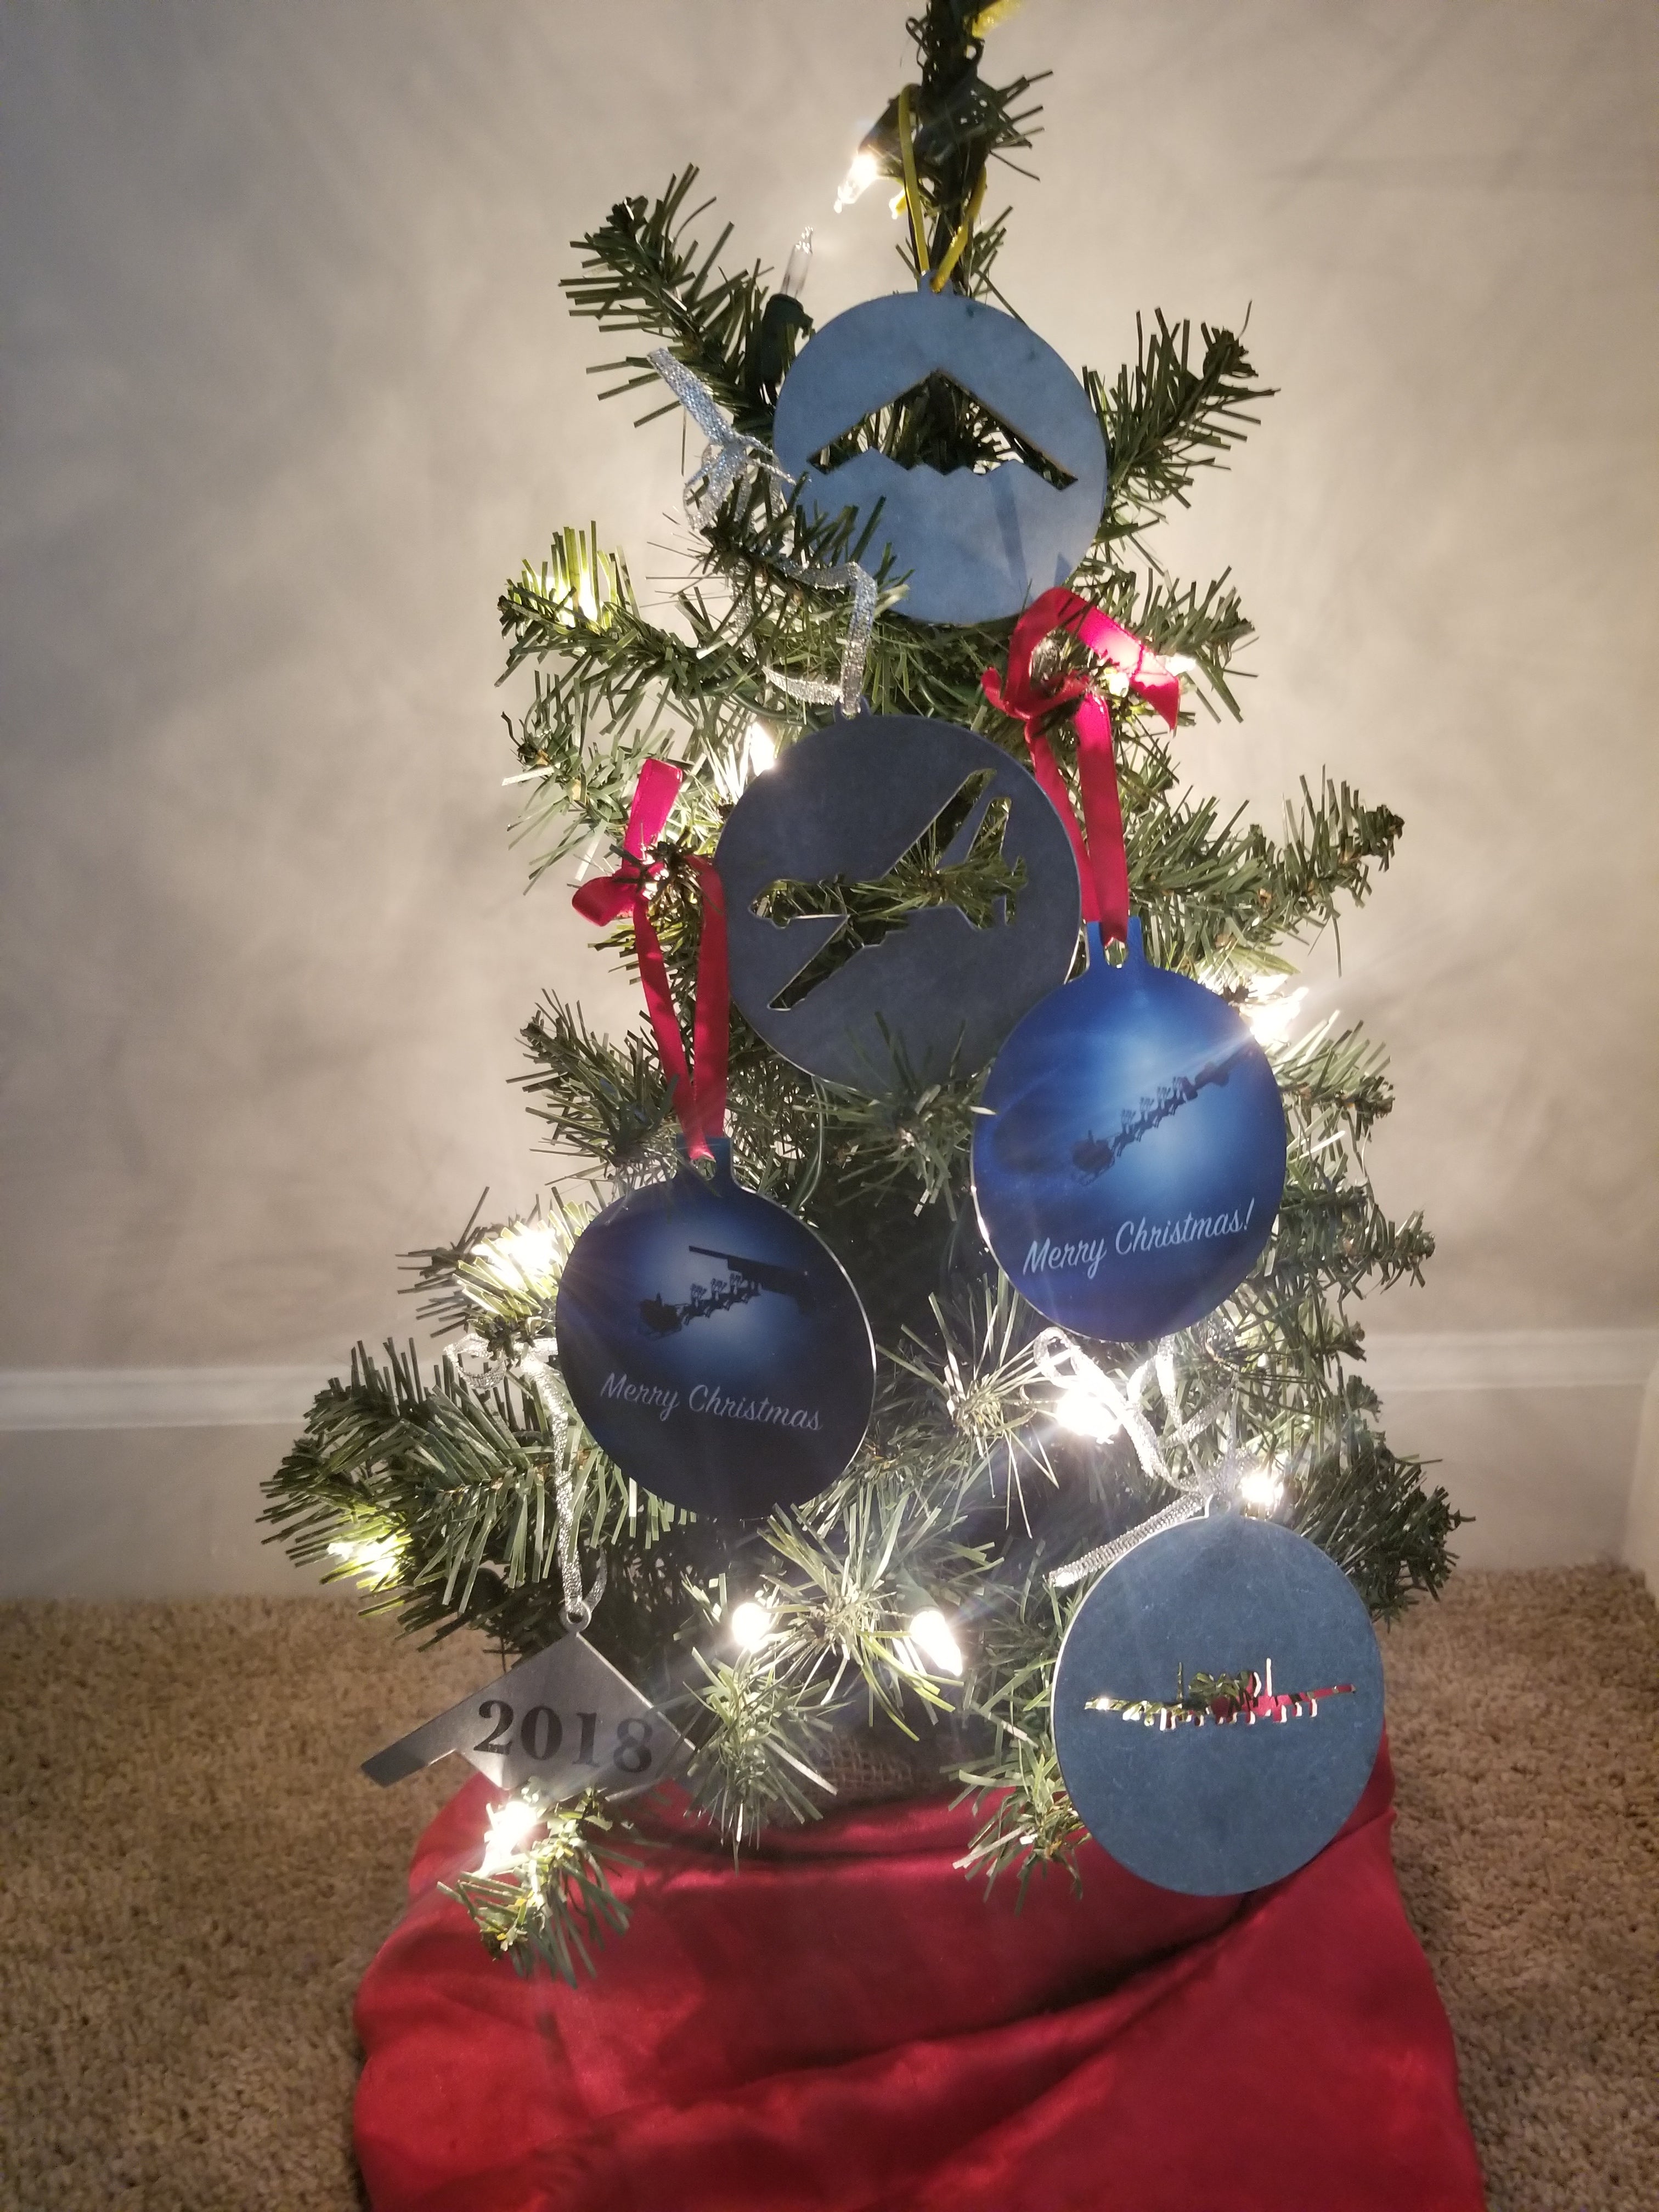 T-6 Texan II Christmas Ornament